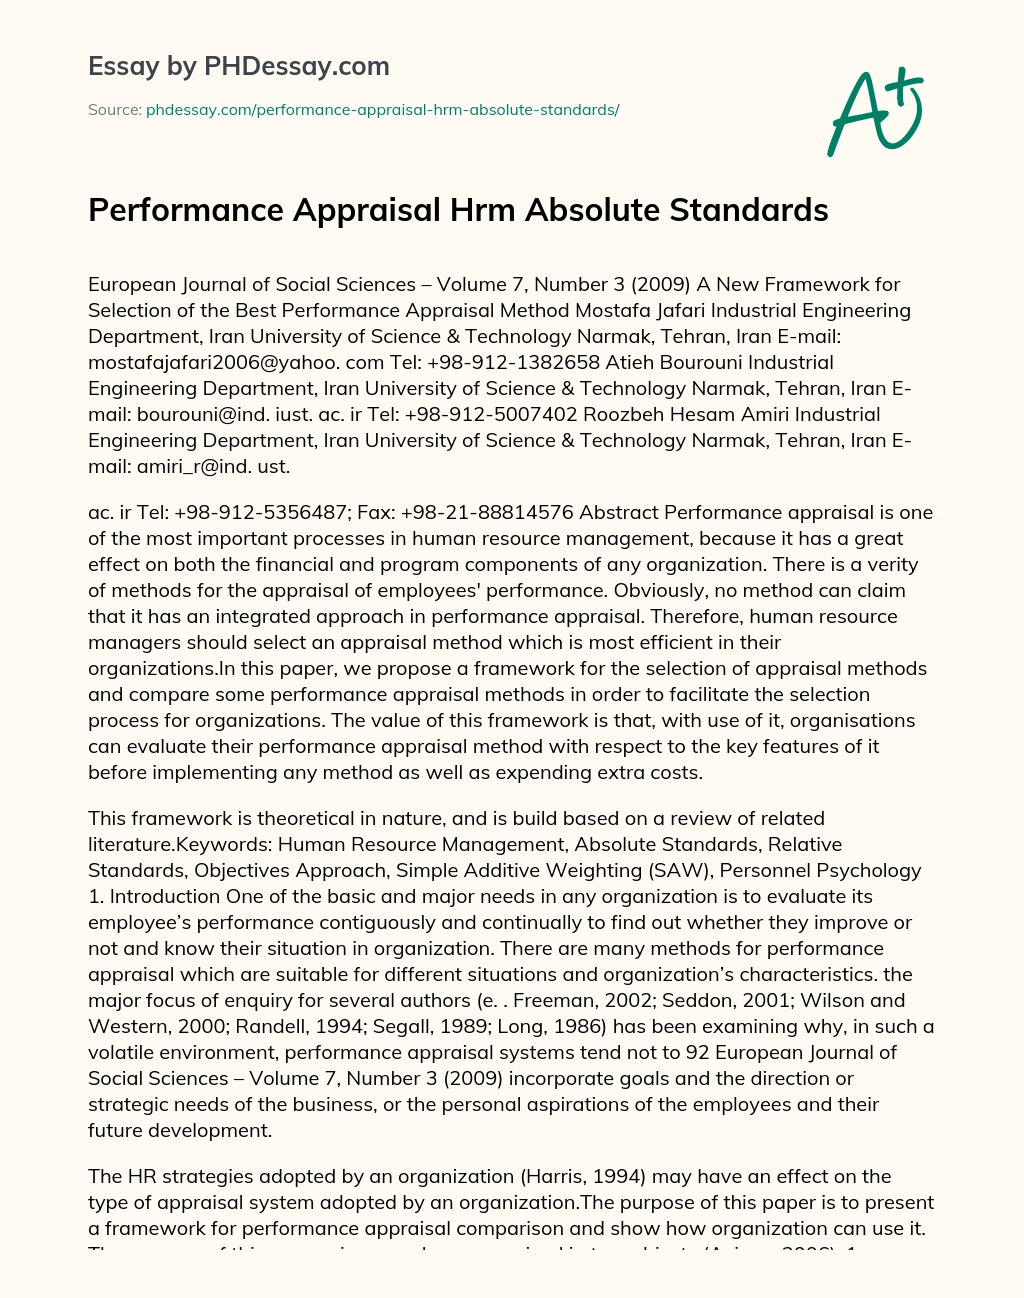 Performance Appraisal Hrm Absolute Standards essay